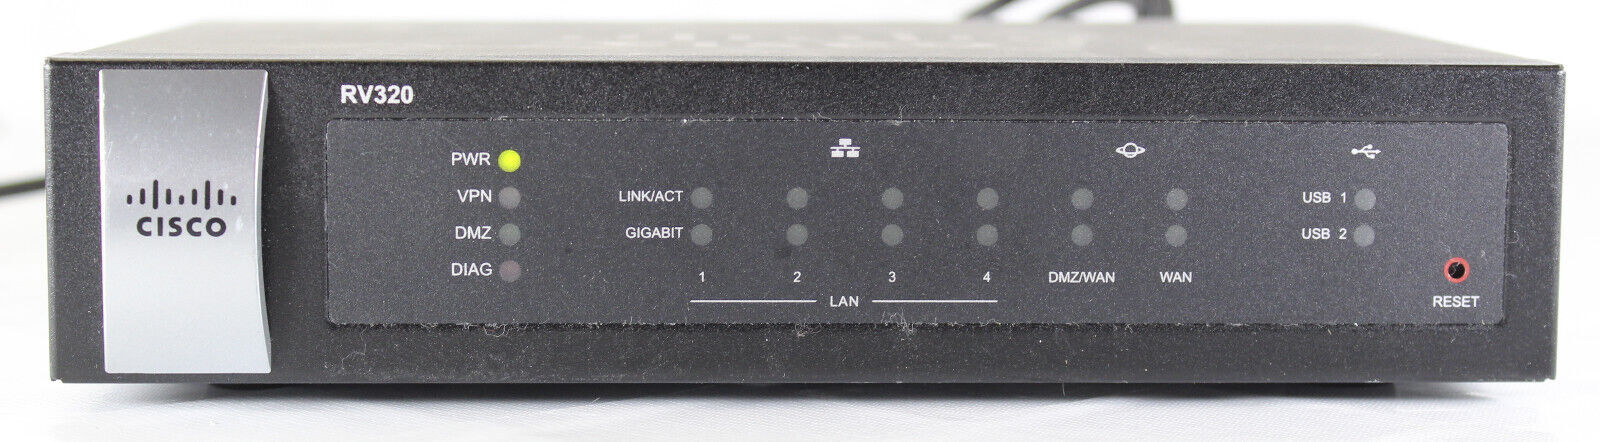 Cisco RV320 Gigabit Dual WAN VPN Router RV320-K9 